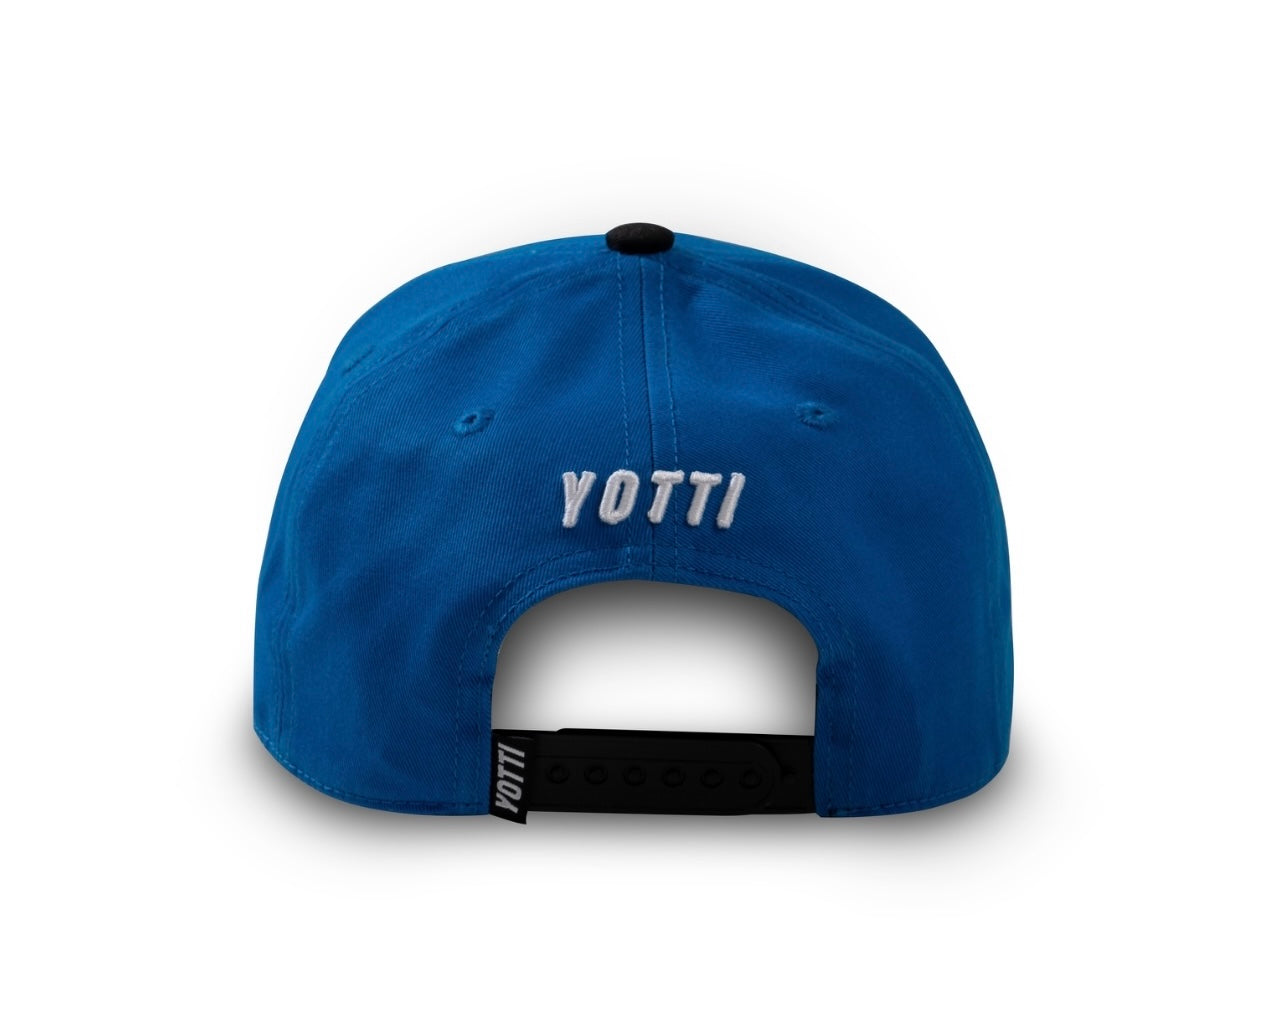 Yotti Full Material | Cobalt Blue / Black